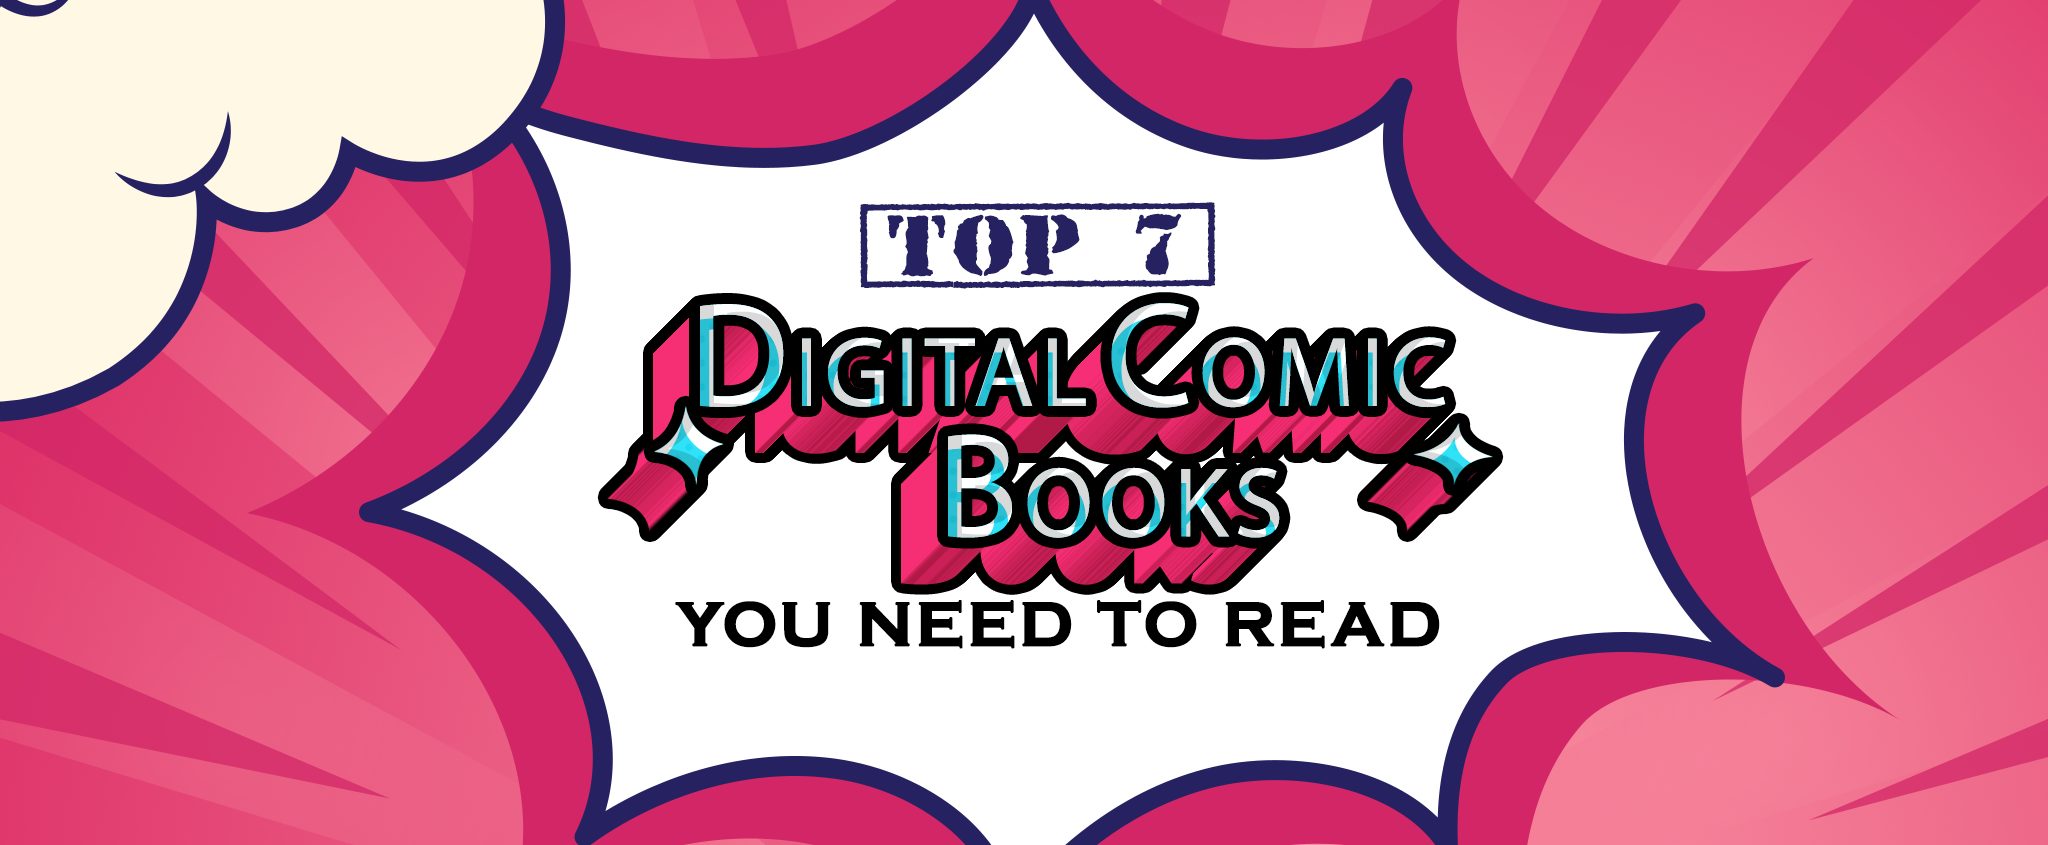 Top 7 Digital Comic Books You Need to Read